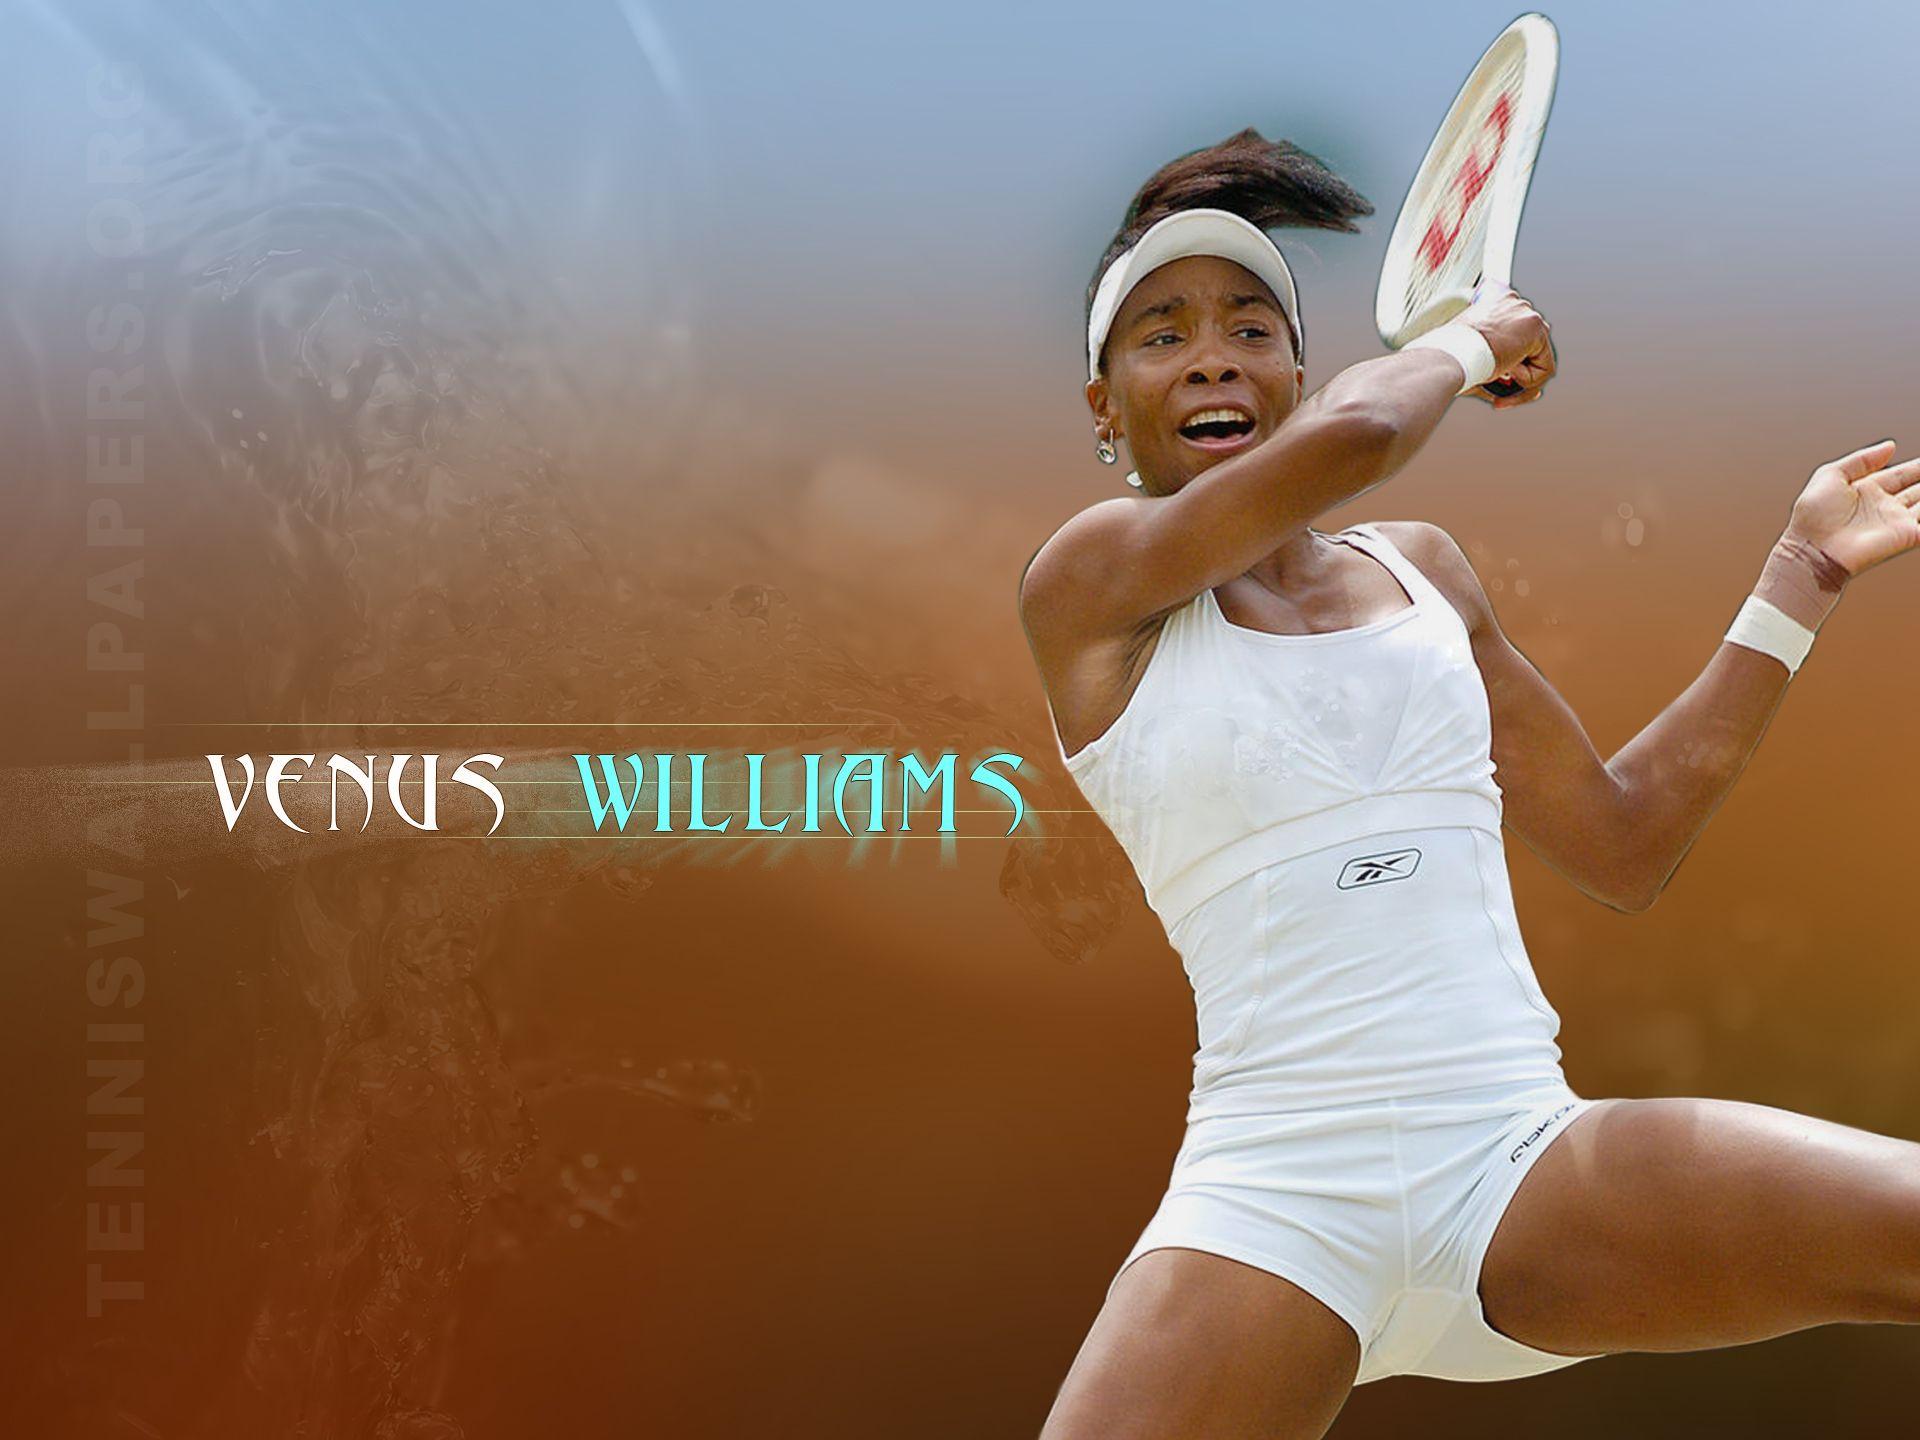 Venus Williams Wallpapers